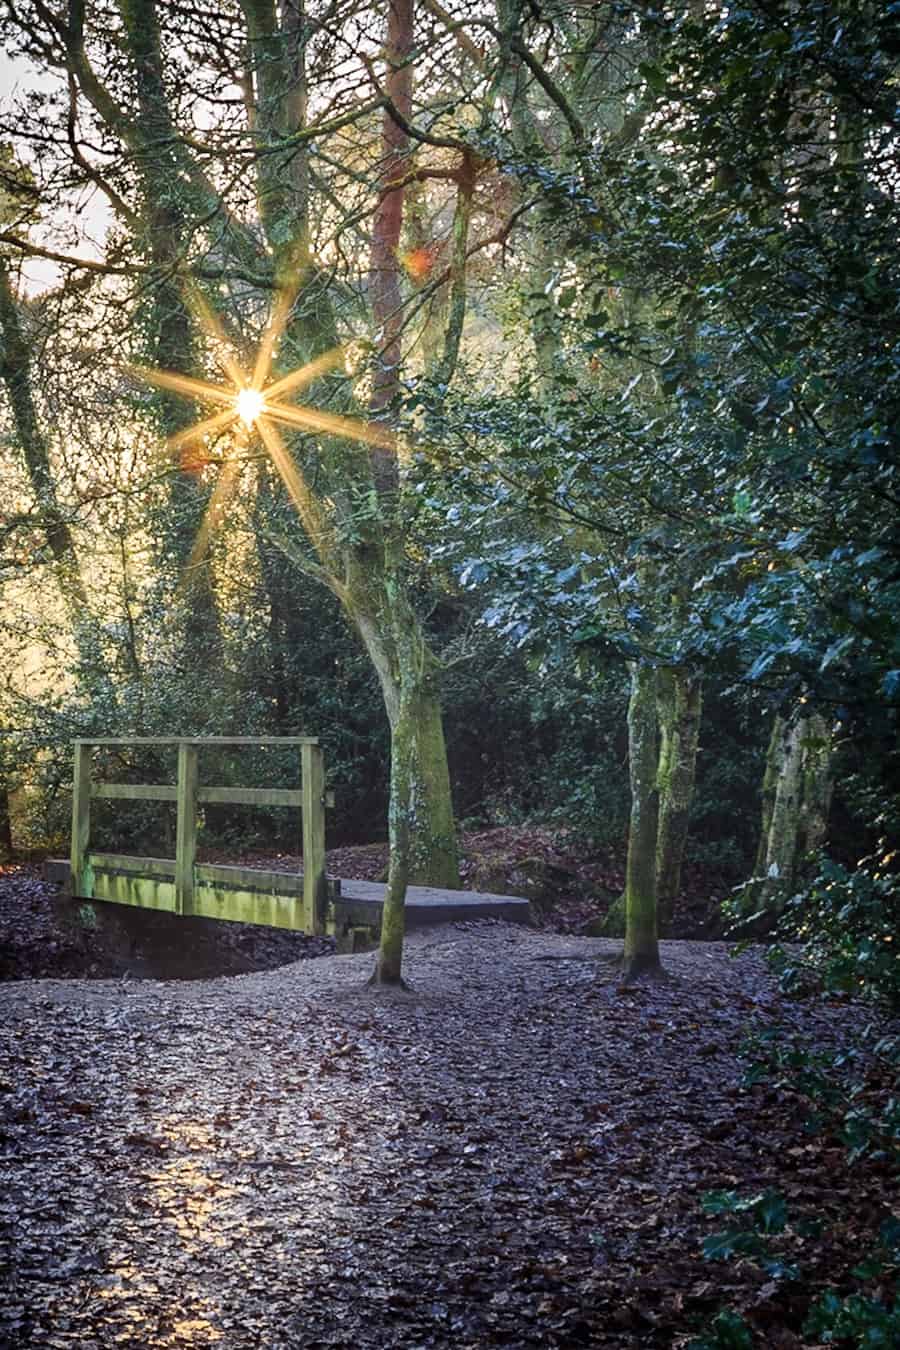  Footbridge in the woods illuminated by the sunshine 